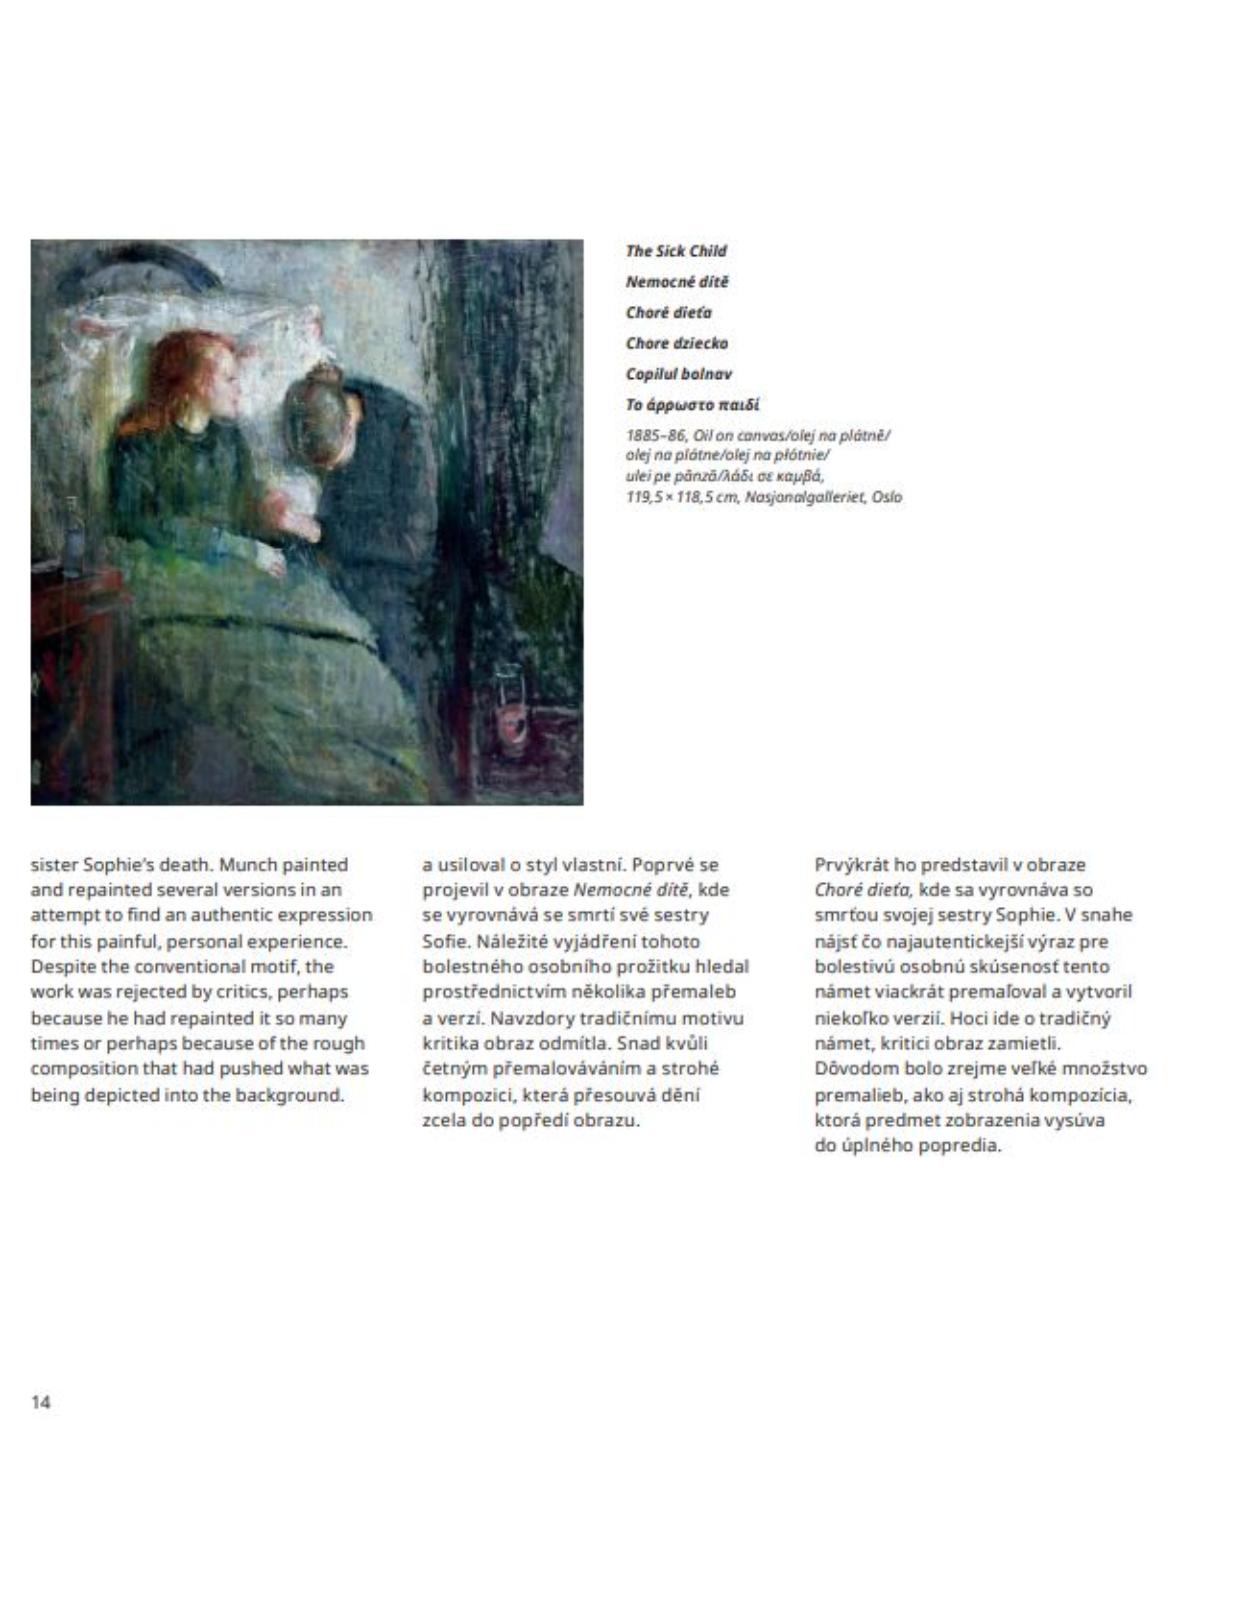 Album de arta Edvard Munch